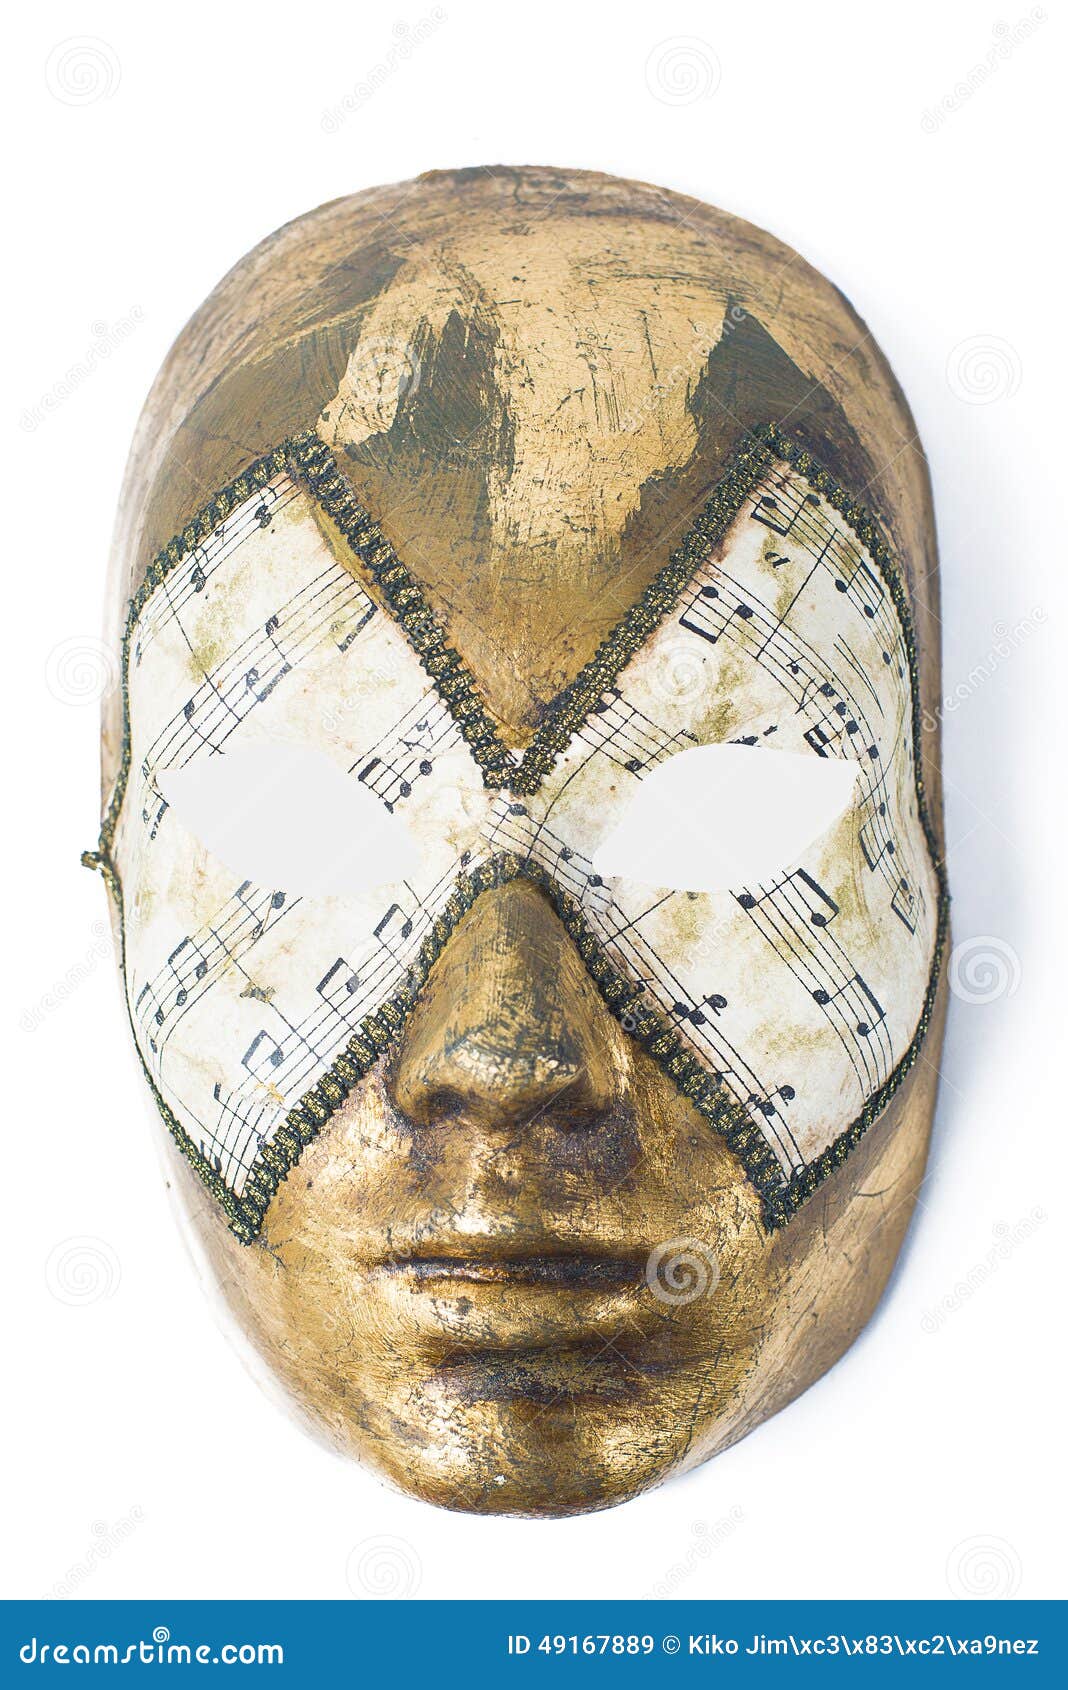 venetian mask on white background